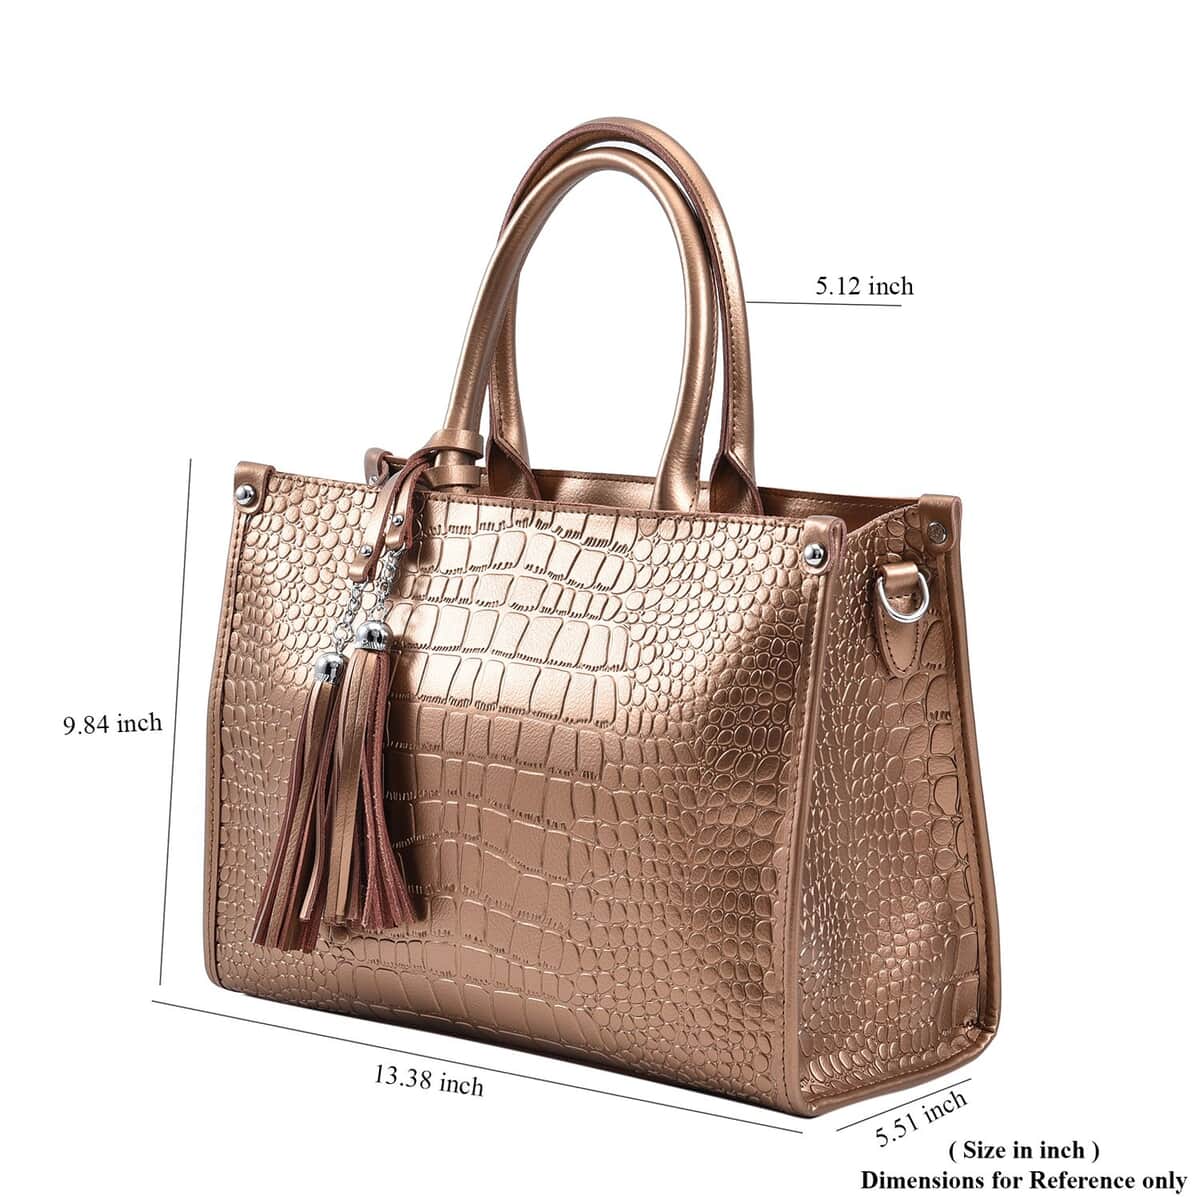 TLV Metallic Brown Crocodile Pattern Genuine Leather Convertible Tote Bag (13.38"x5.51"x9.84") image number 6